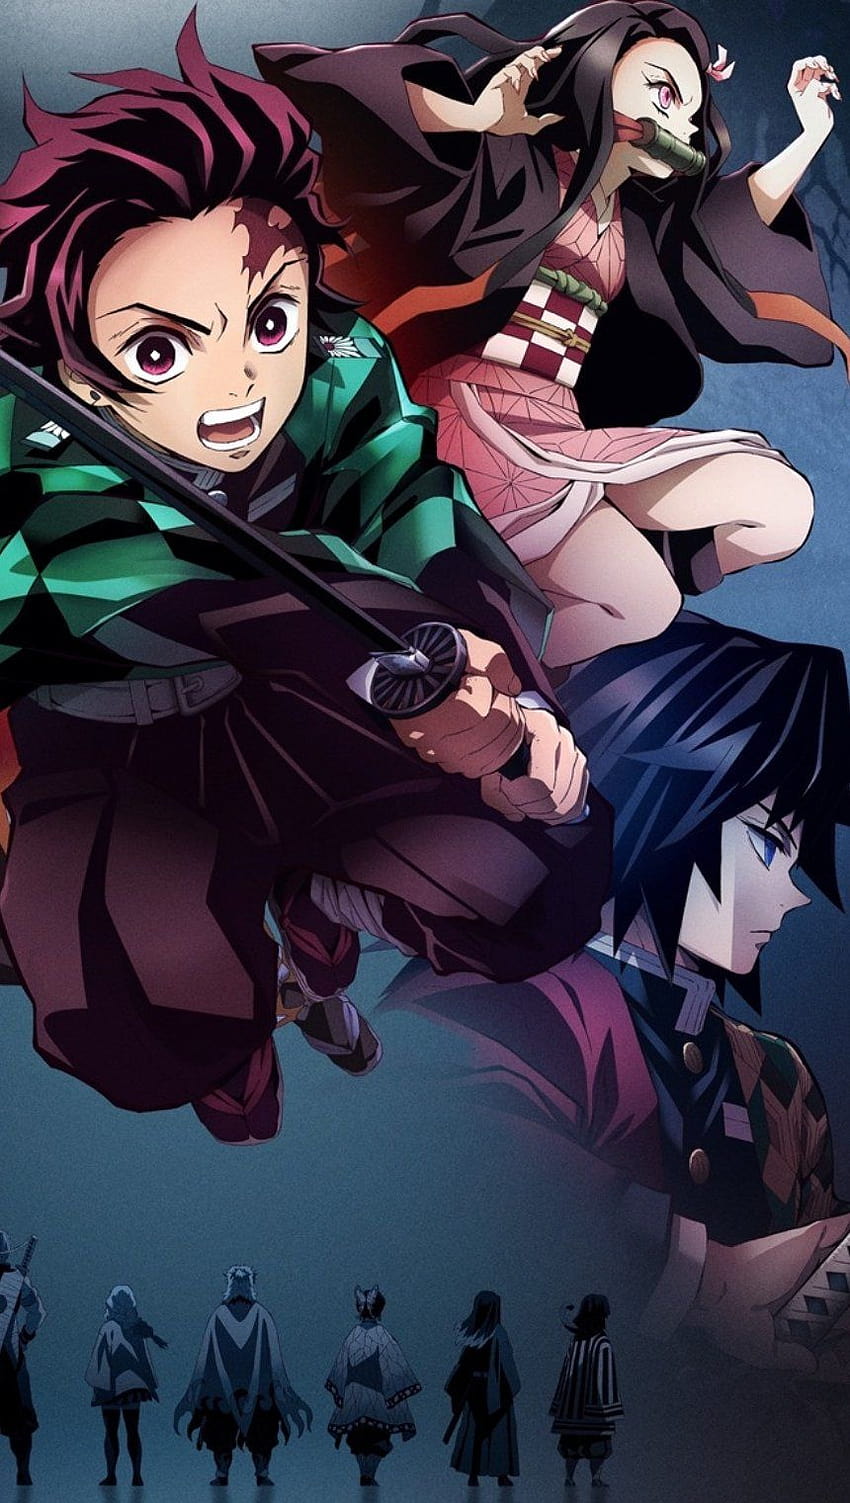 720x1280px, 720P free download  Anime, Kimetsu no Yaiba, vertical